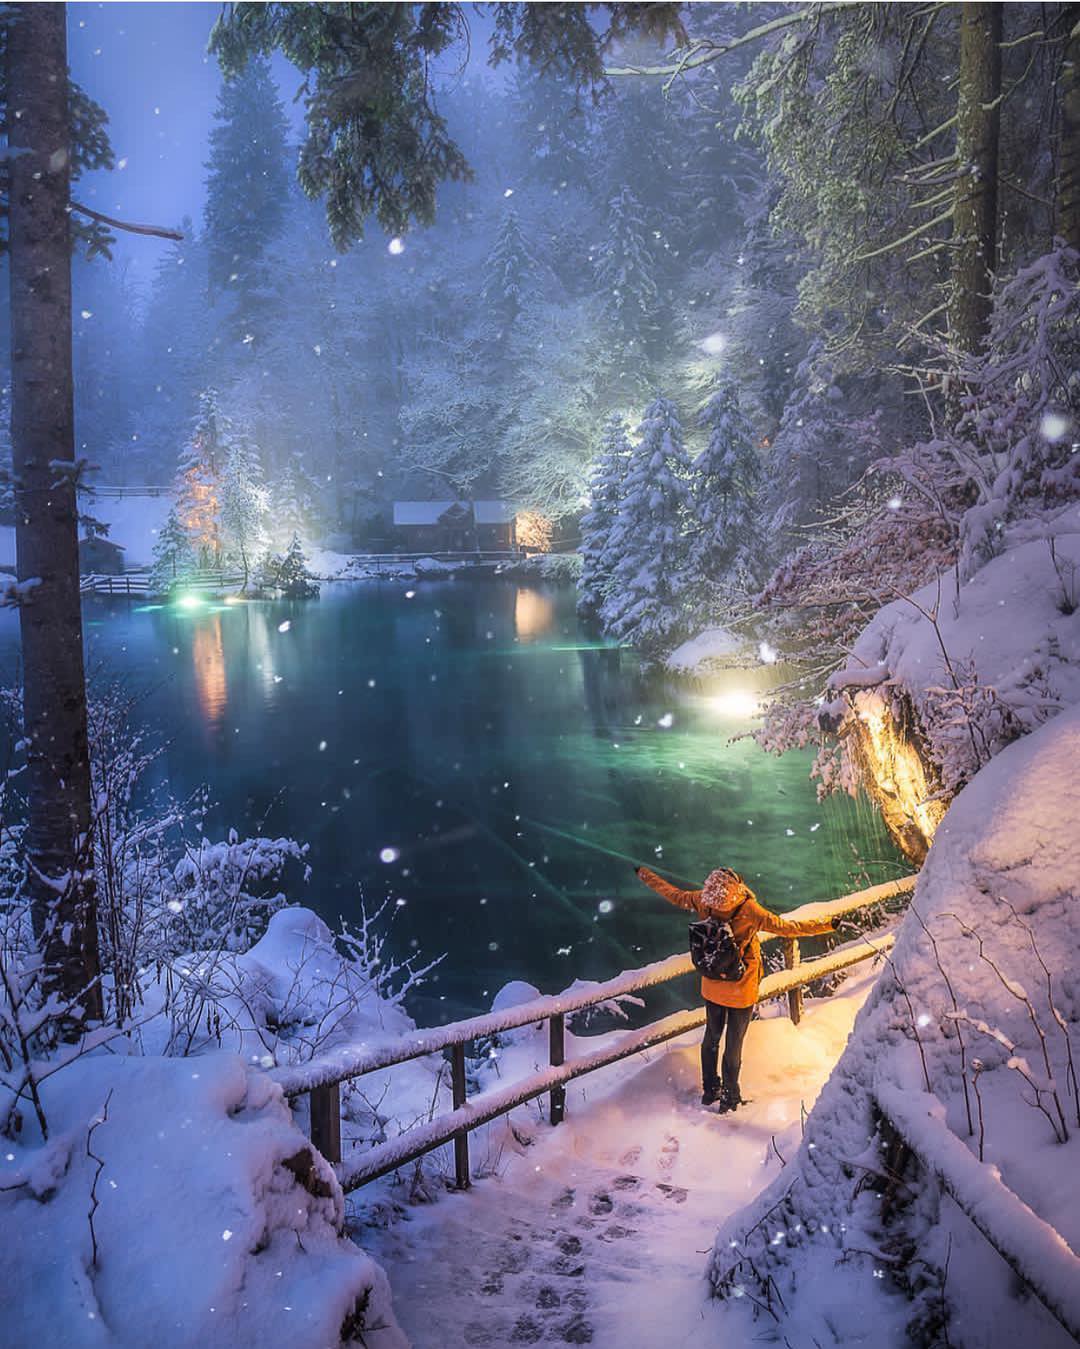 Swiss winter wonderland